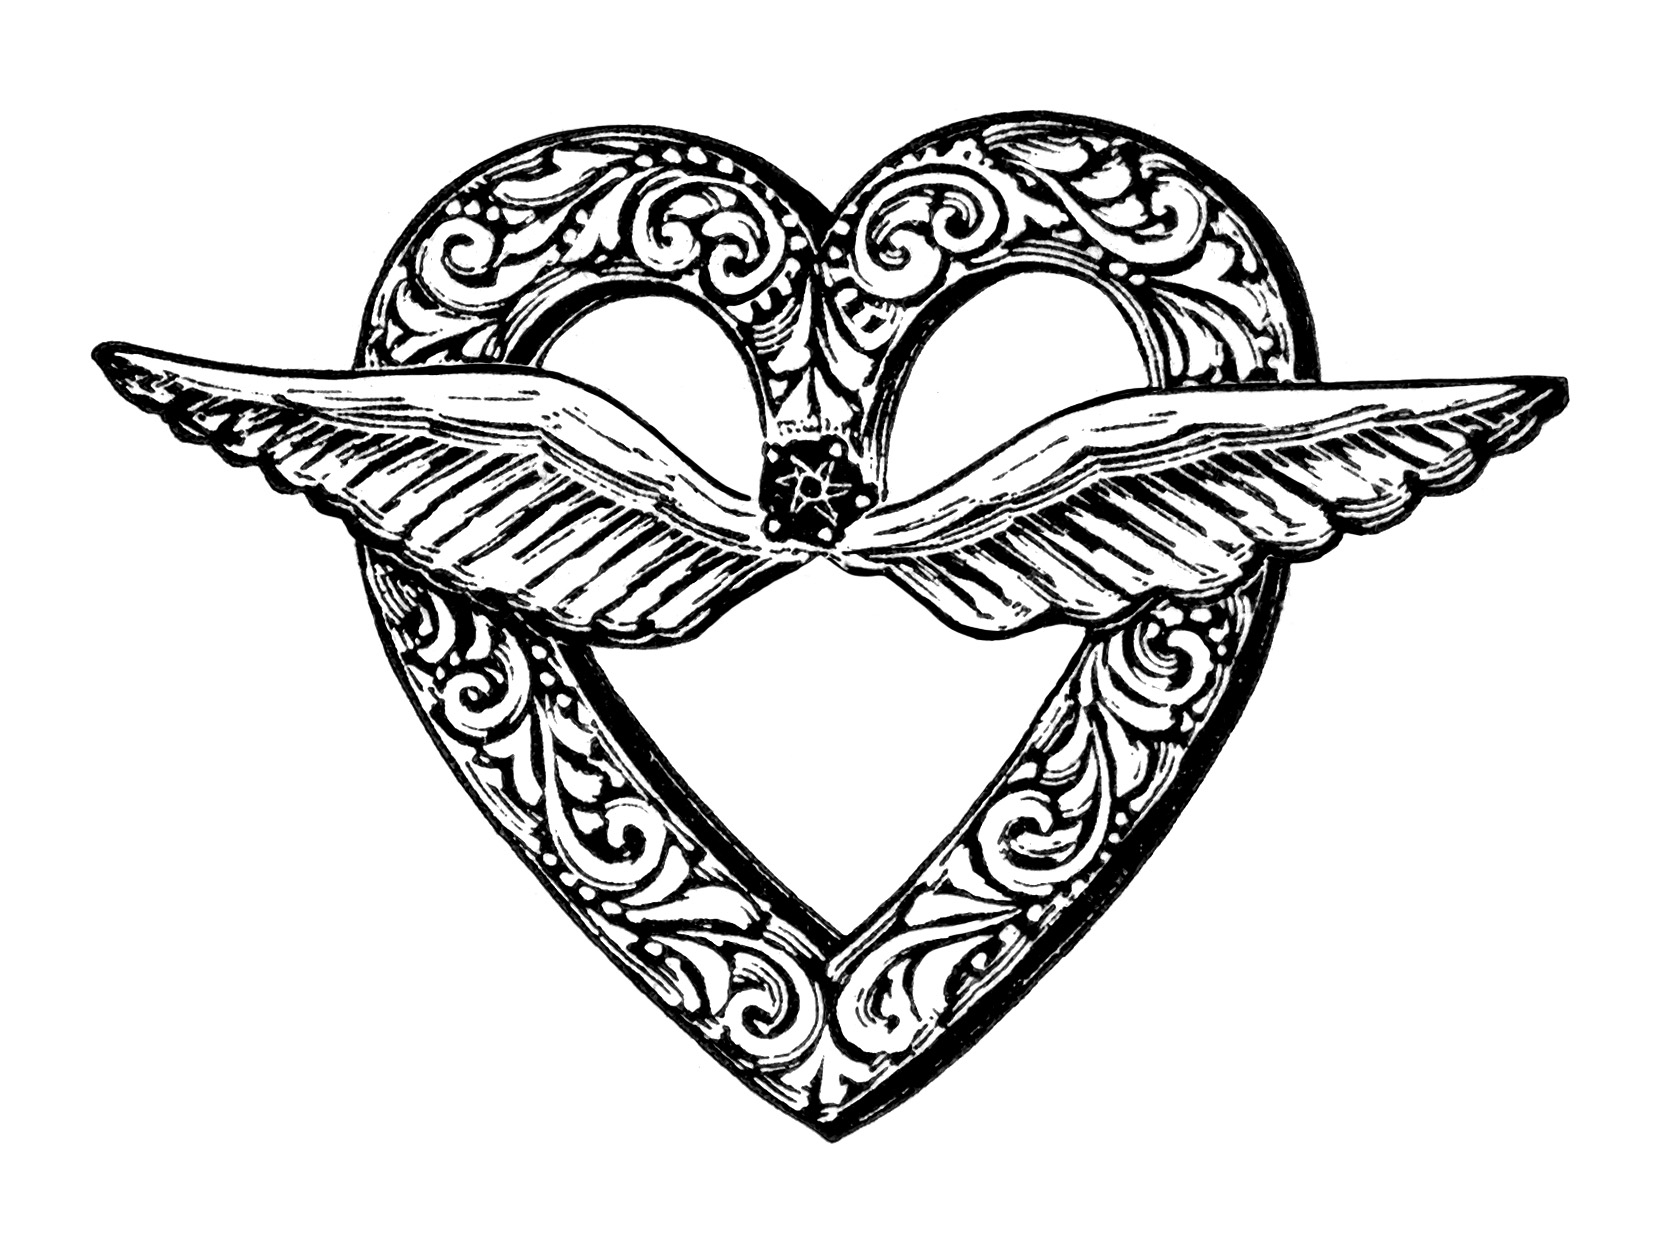 Heart shaped brooch.